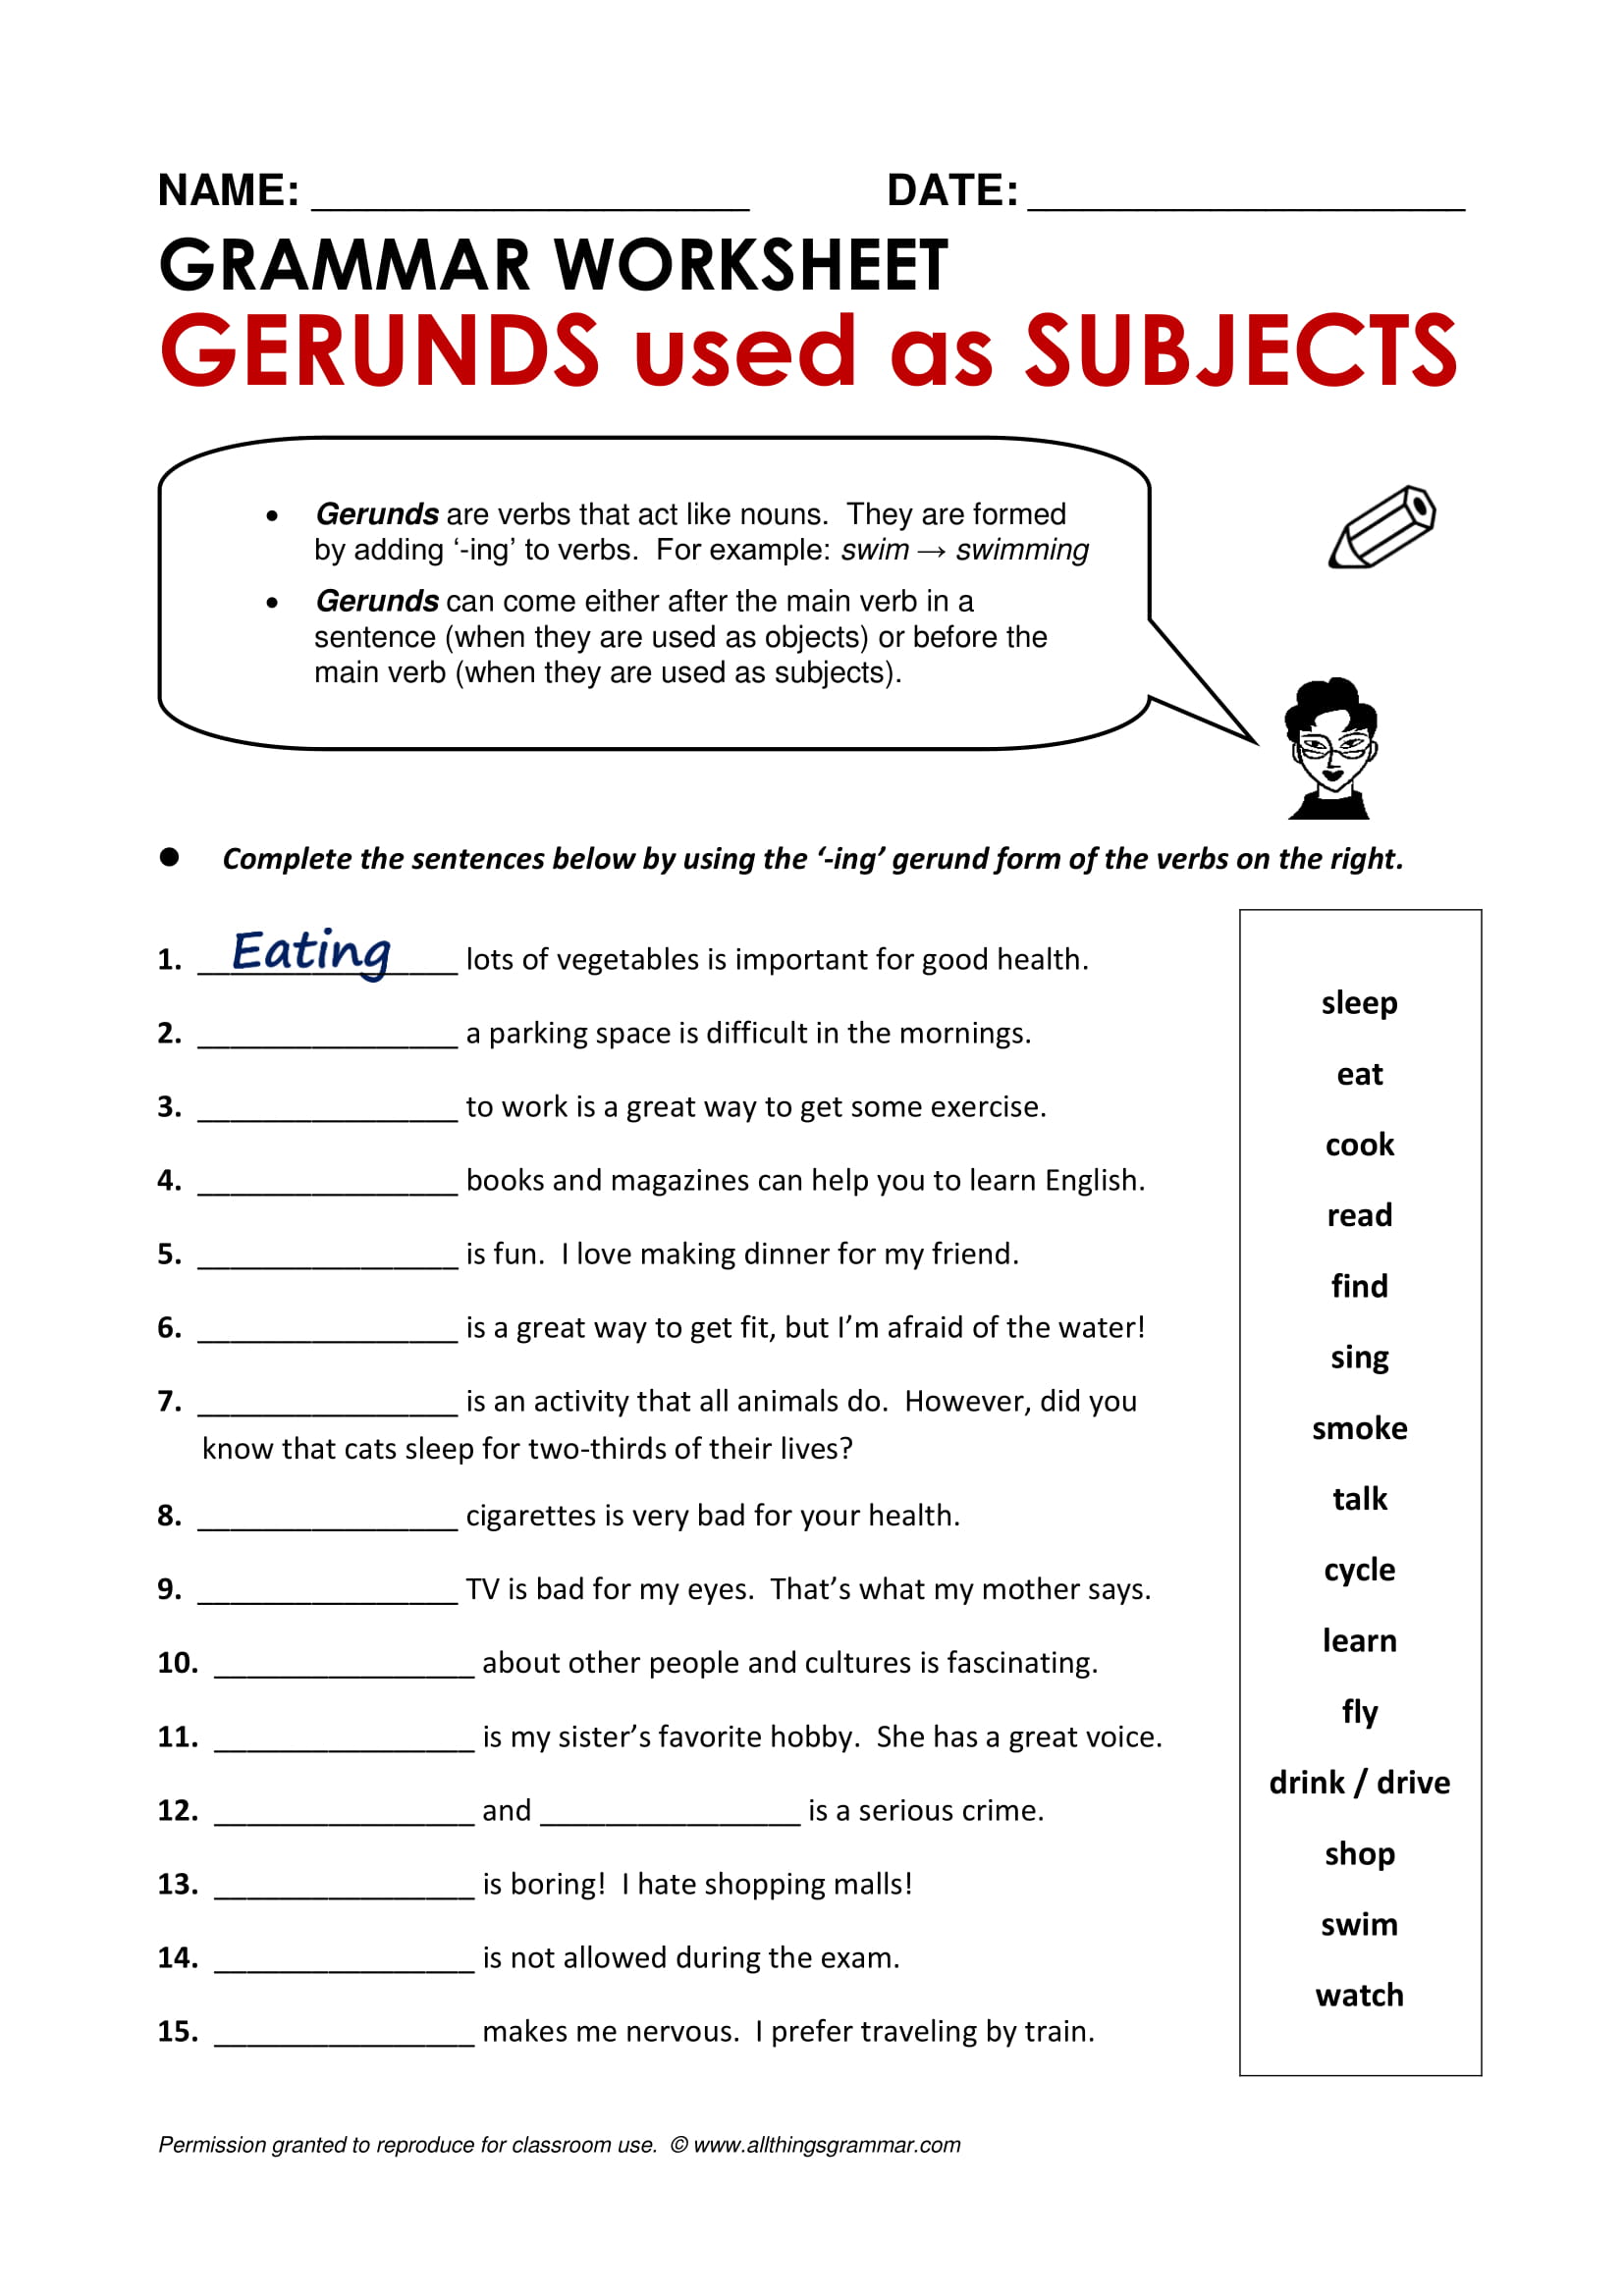 definition-useful-list-of-verbs-followed-by-gerunds-with-gerund-examples-esl-grammar